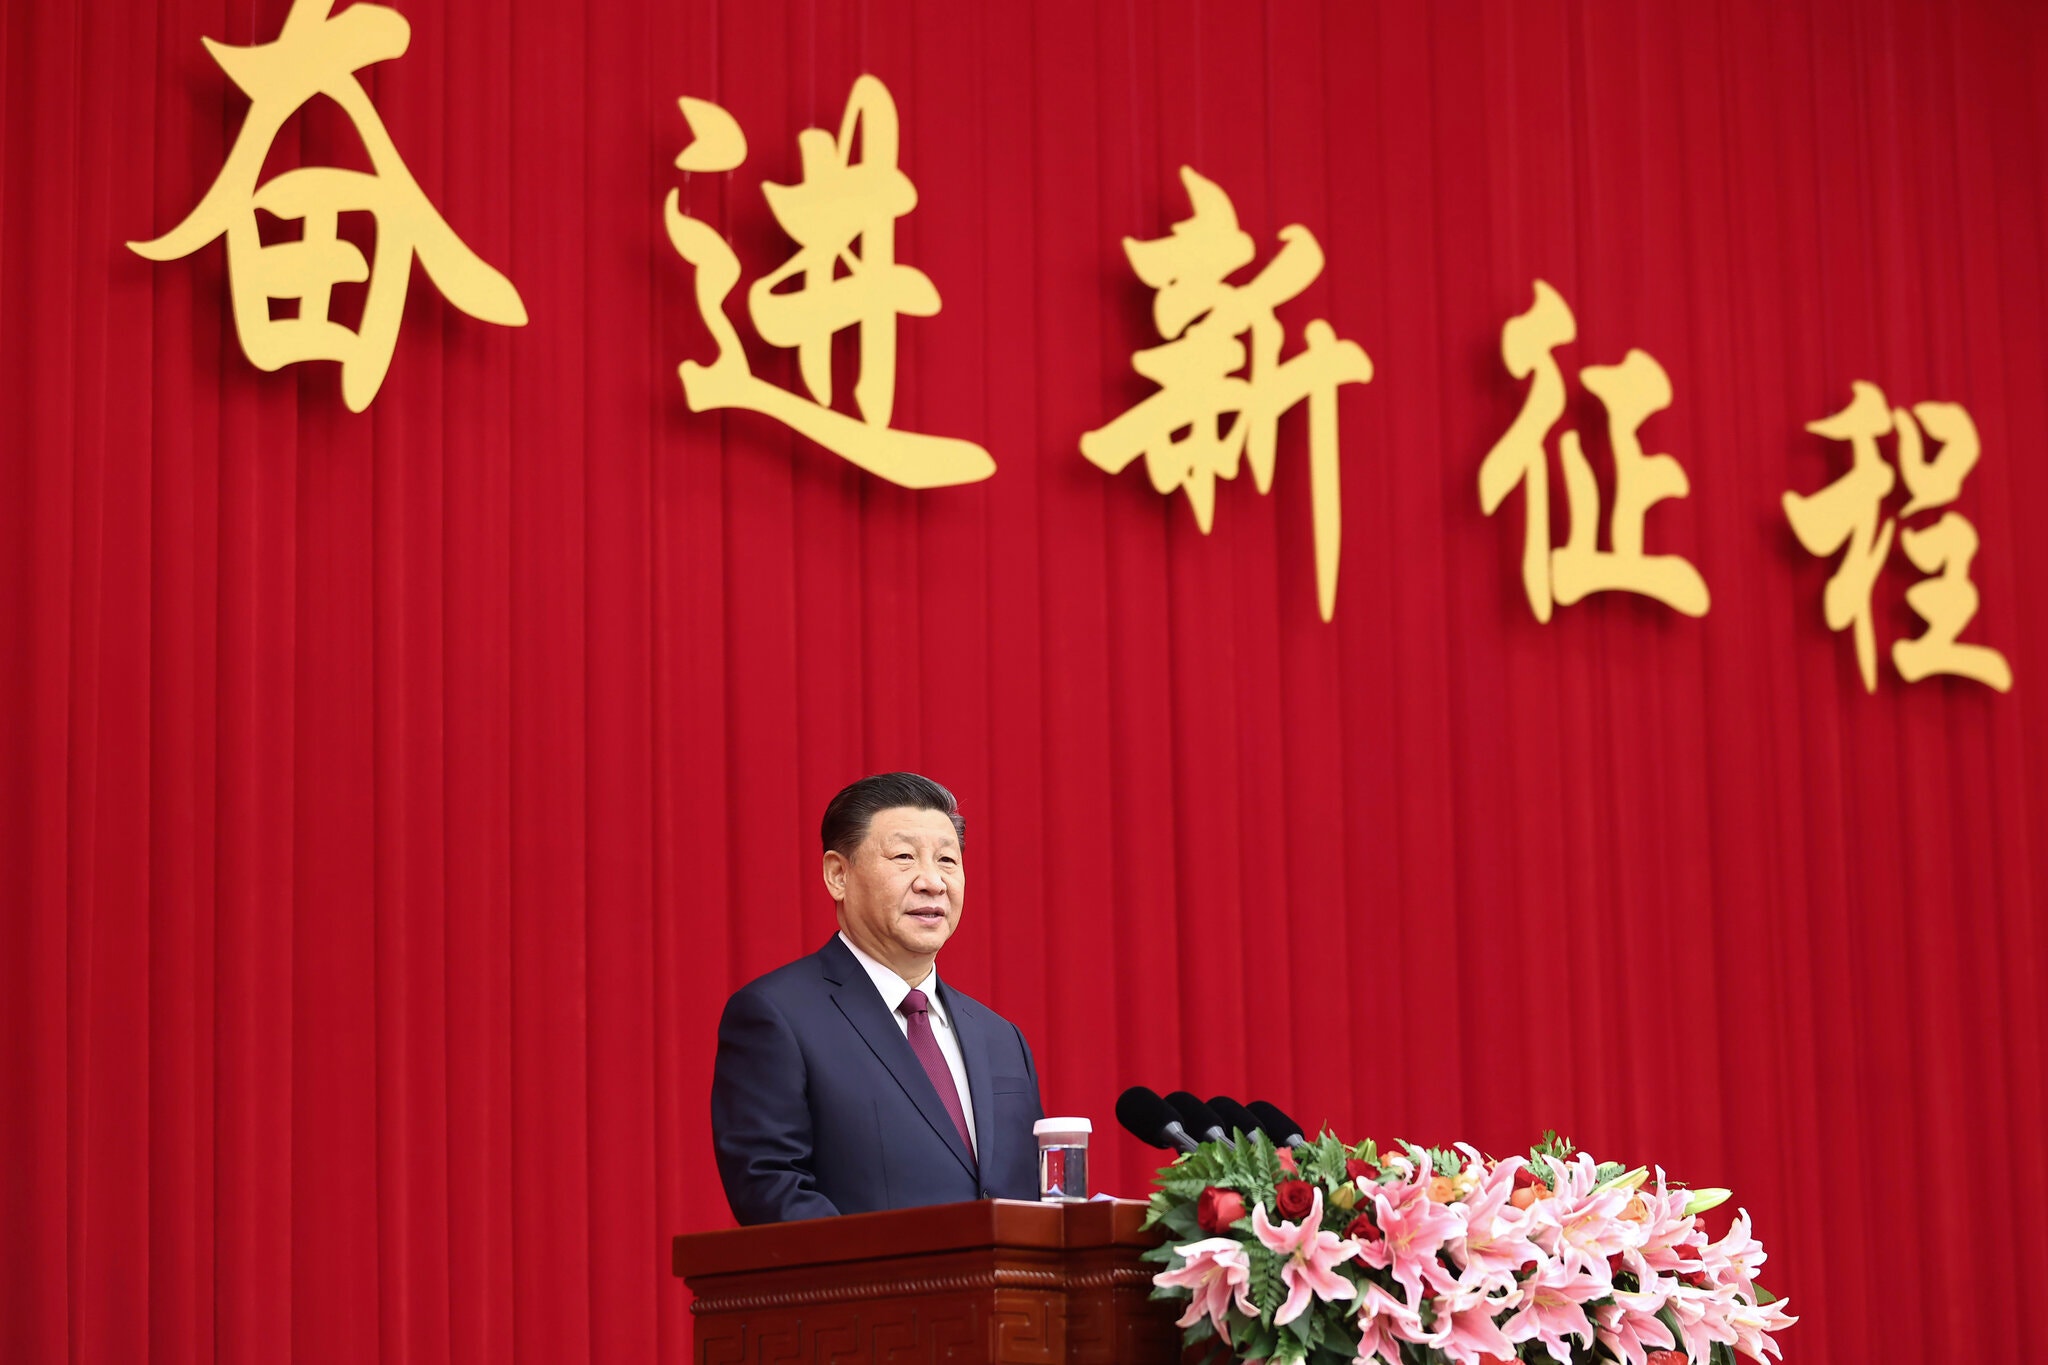 Warning of Income Gap, Xi Tells